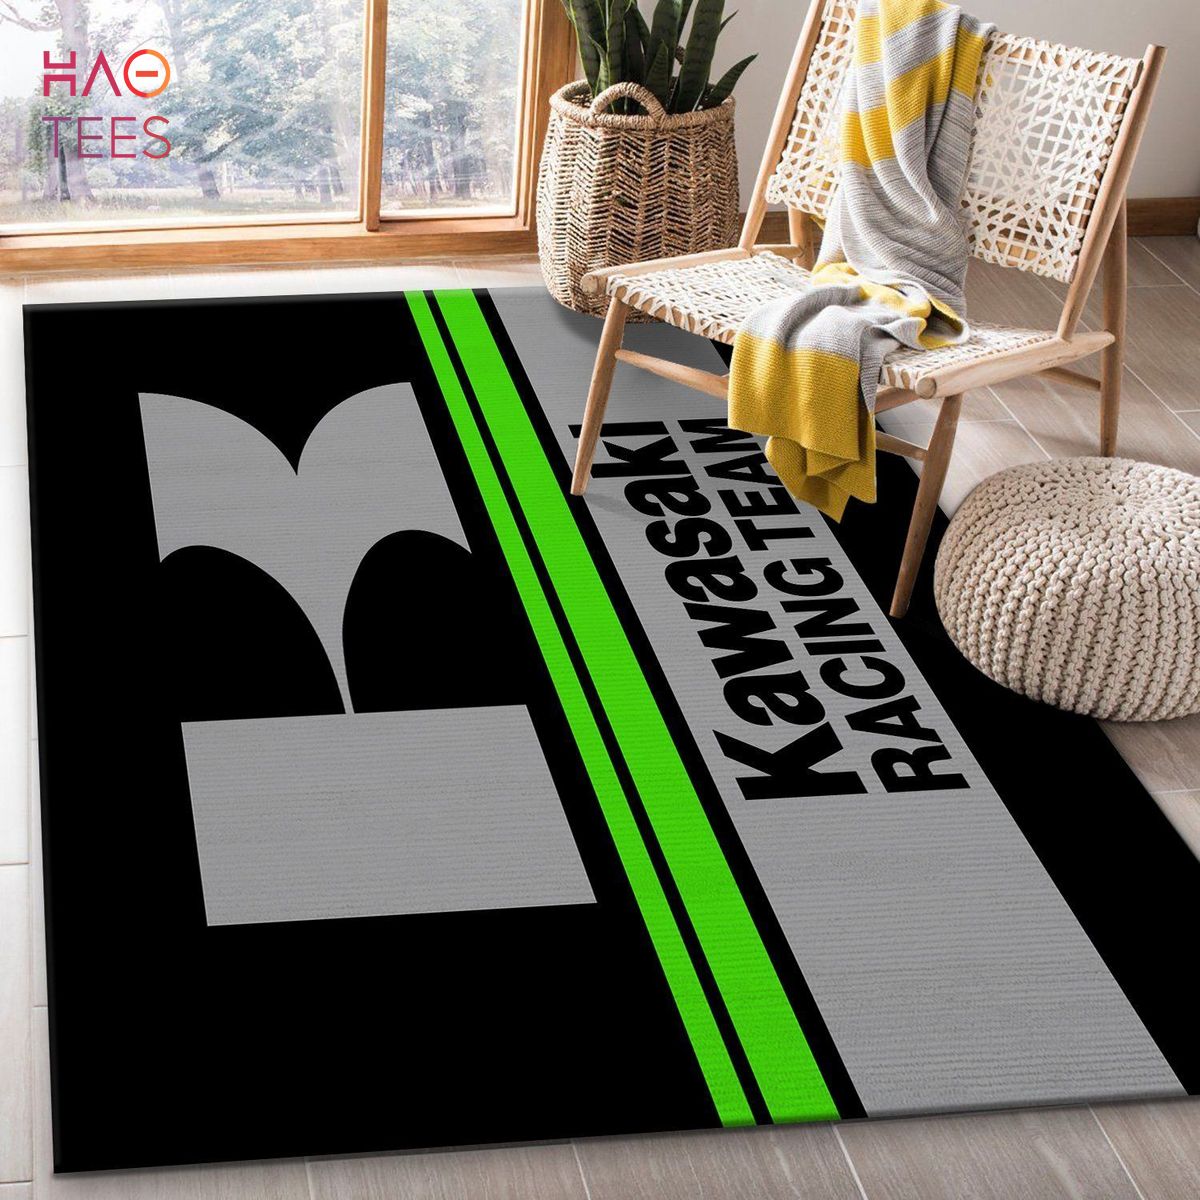 Kawasaki Racing Motorcycle Rug Living Room Carpet Local Brands Floor Decor The US Decor